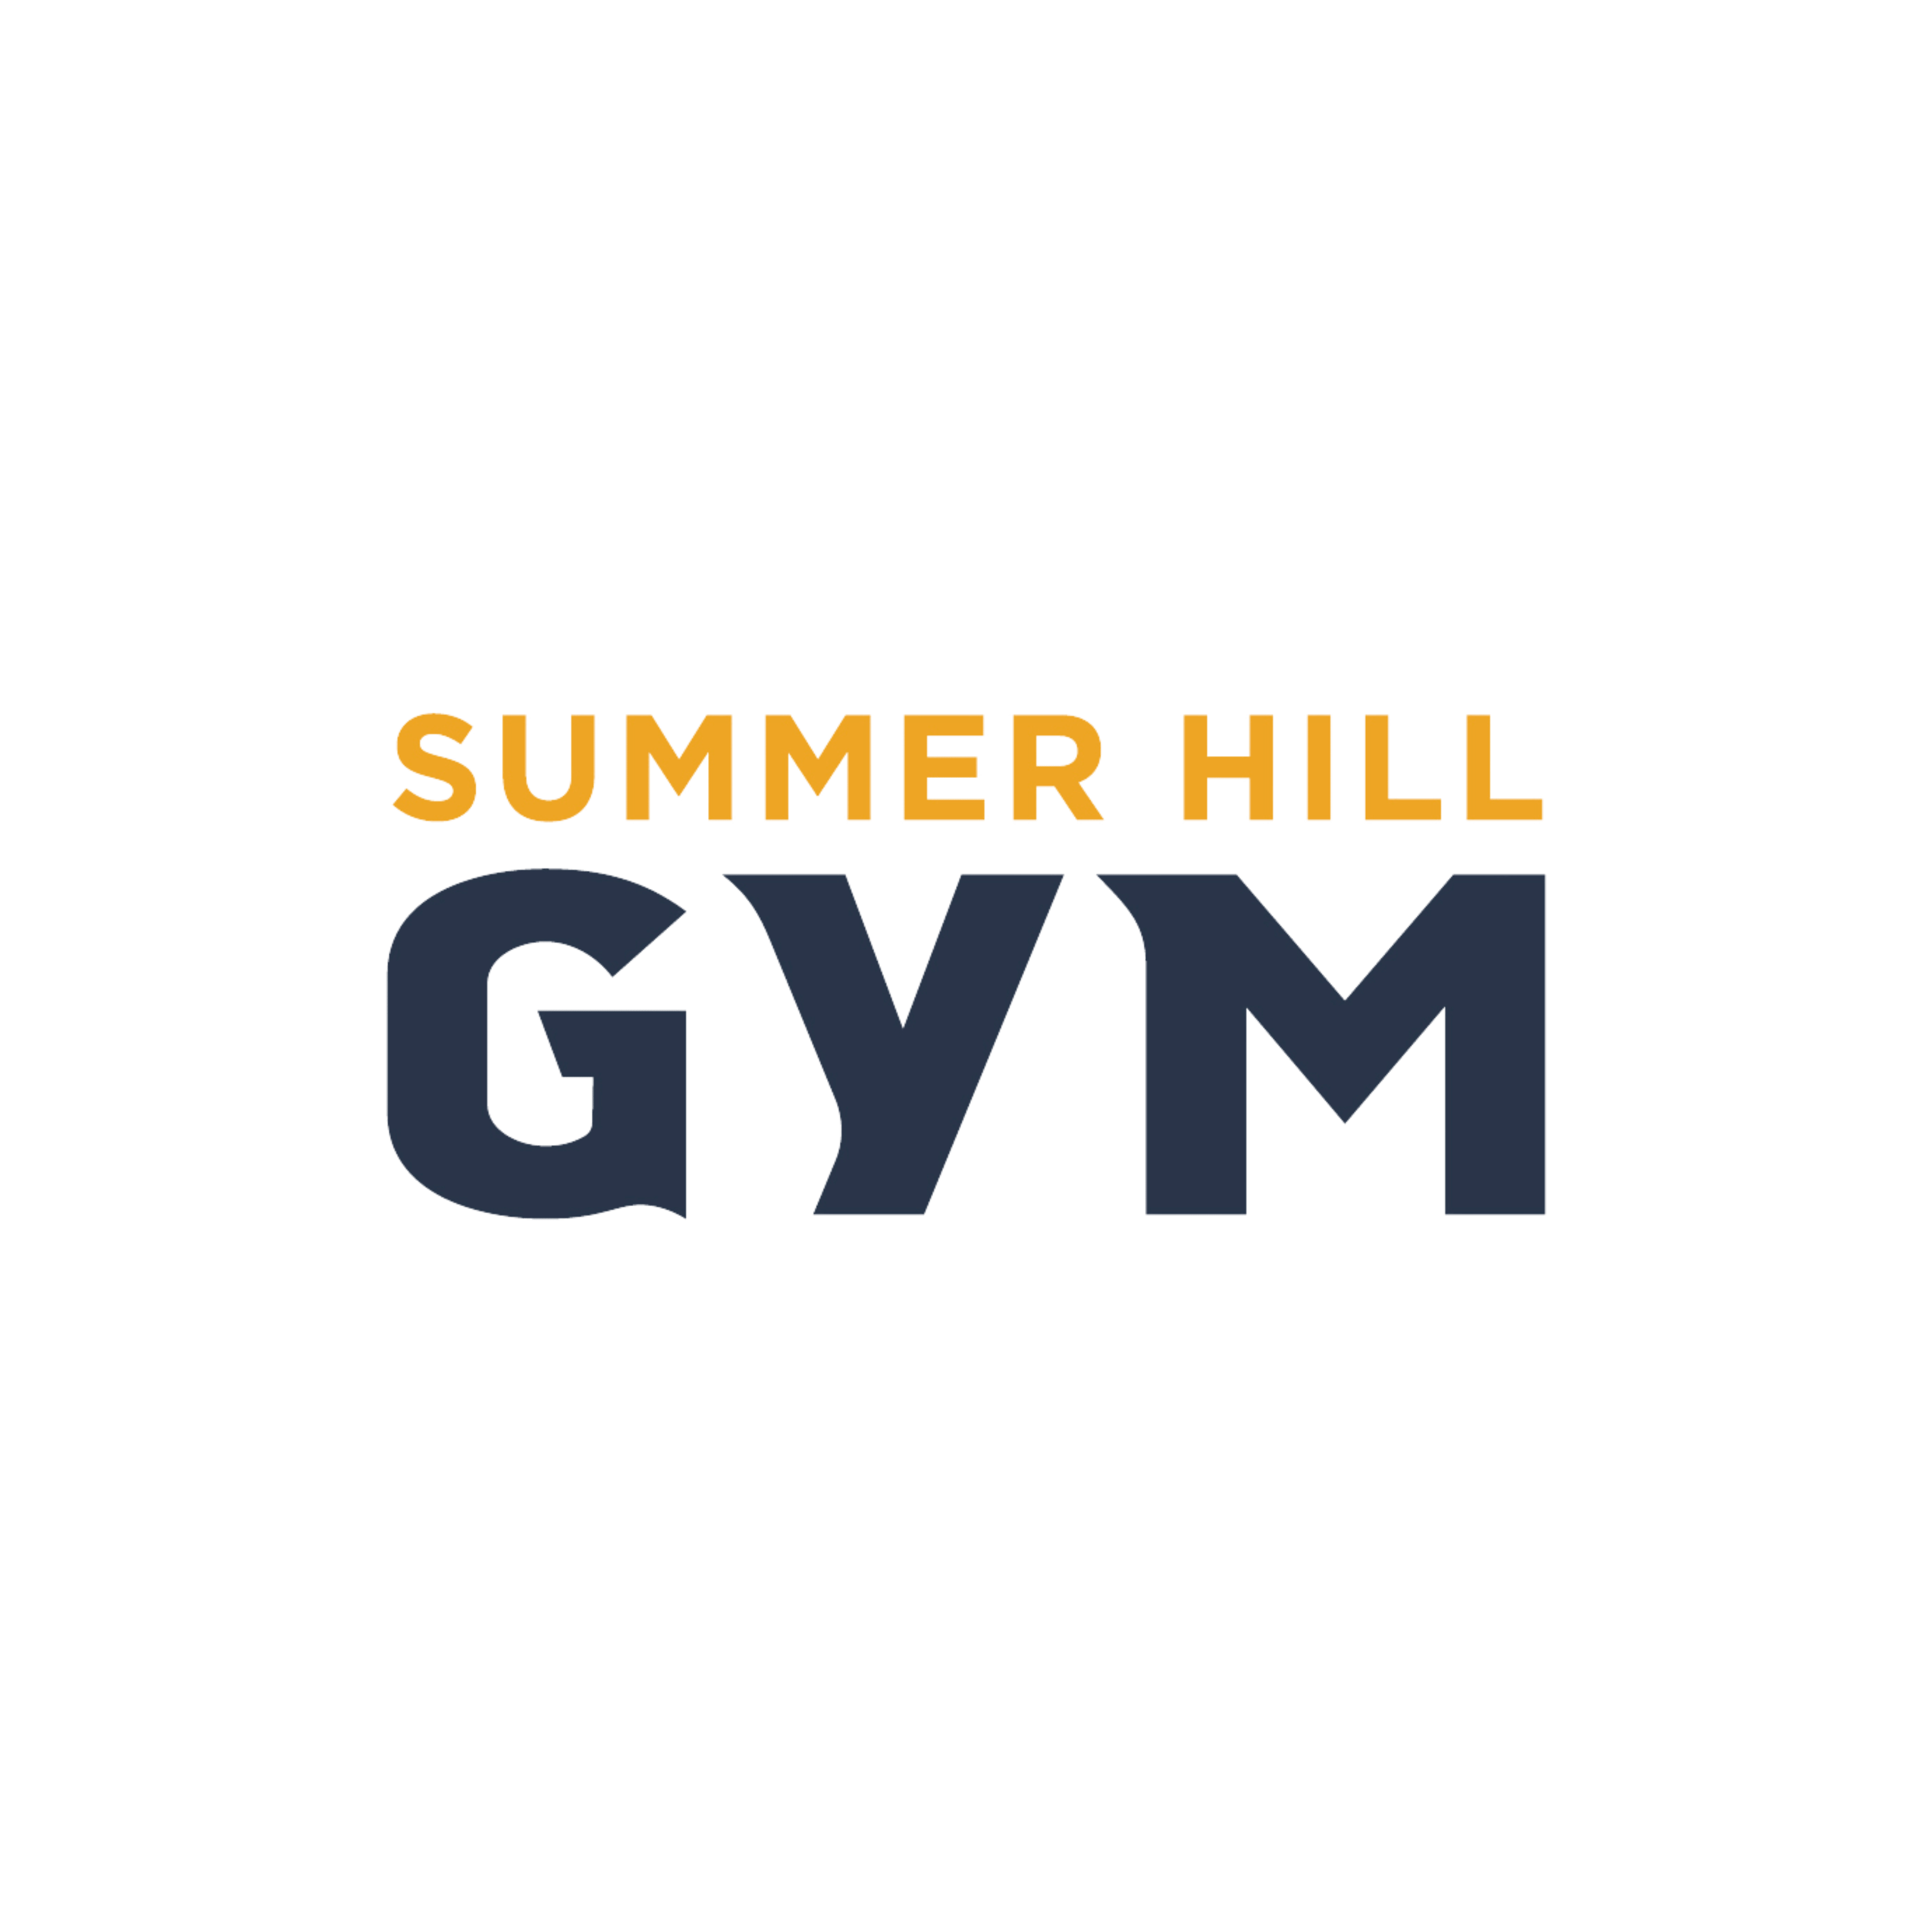 Summer Hill Gym